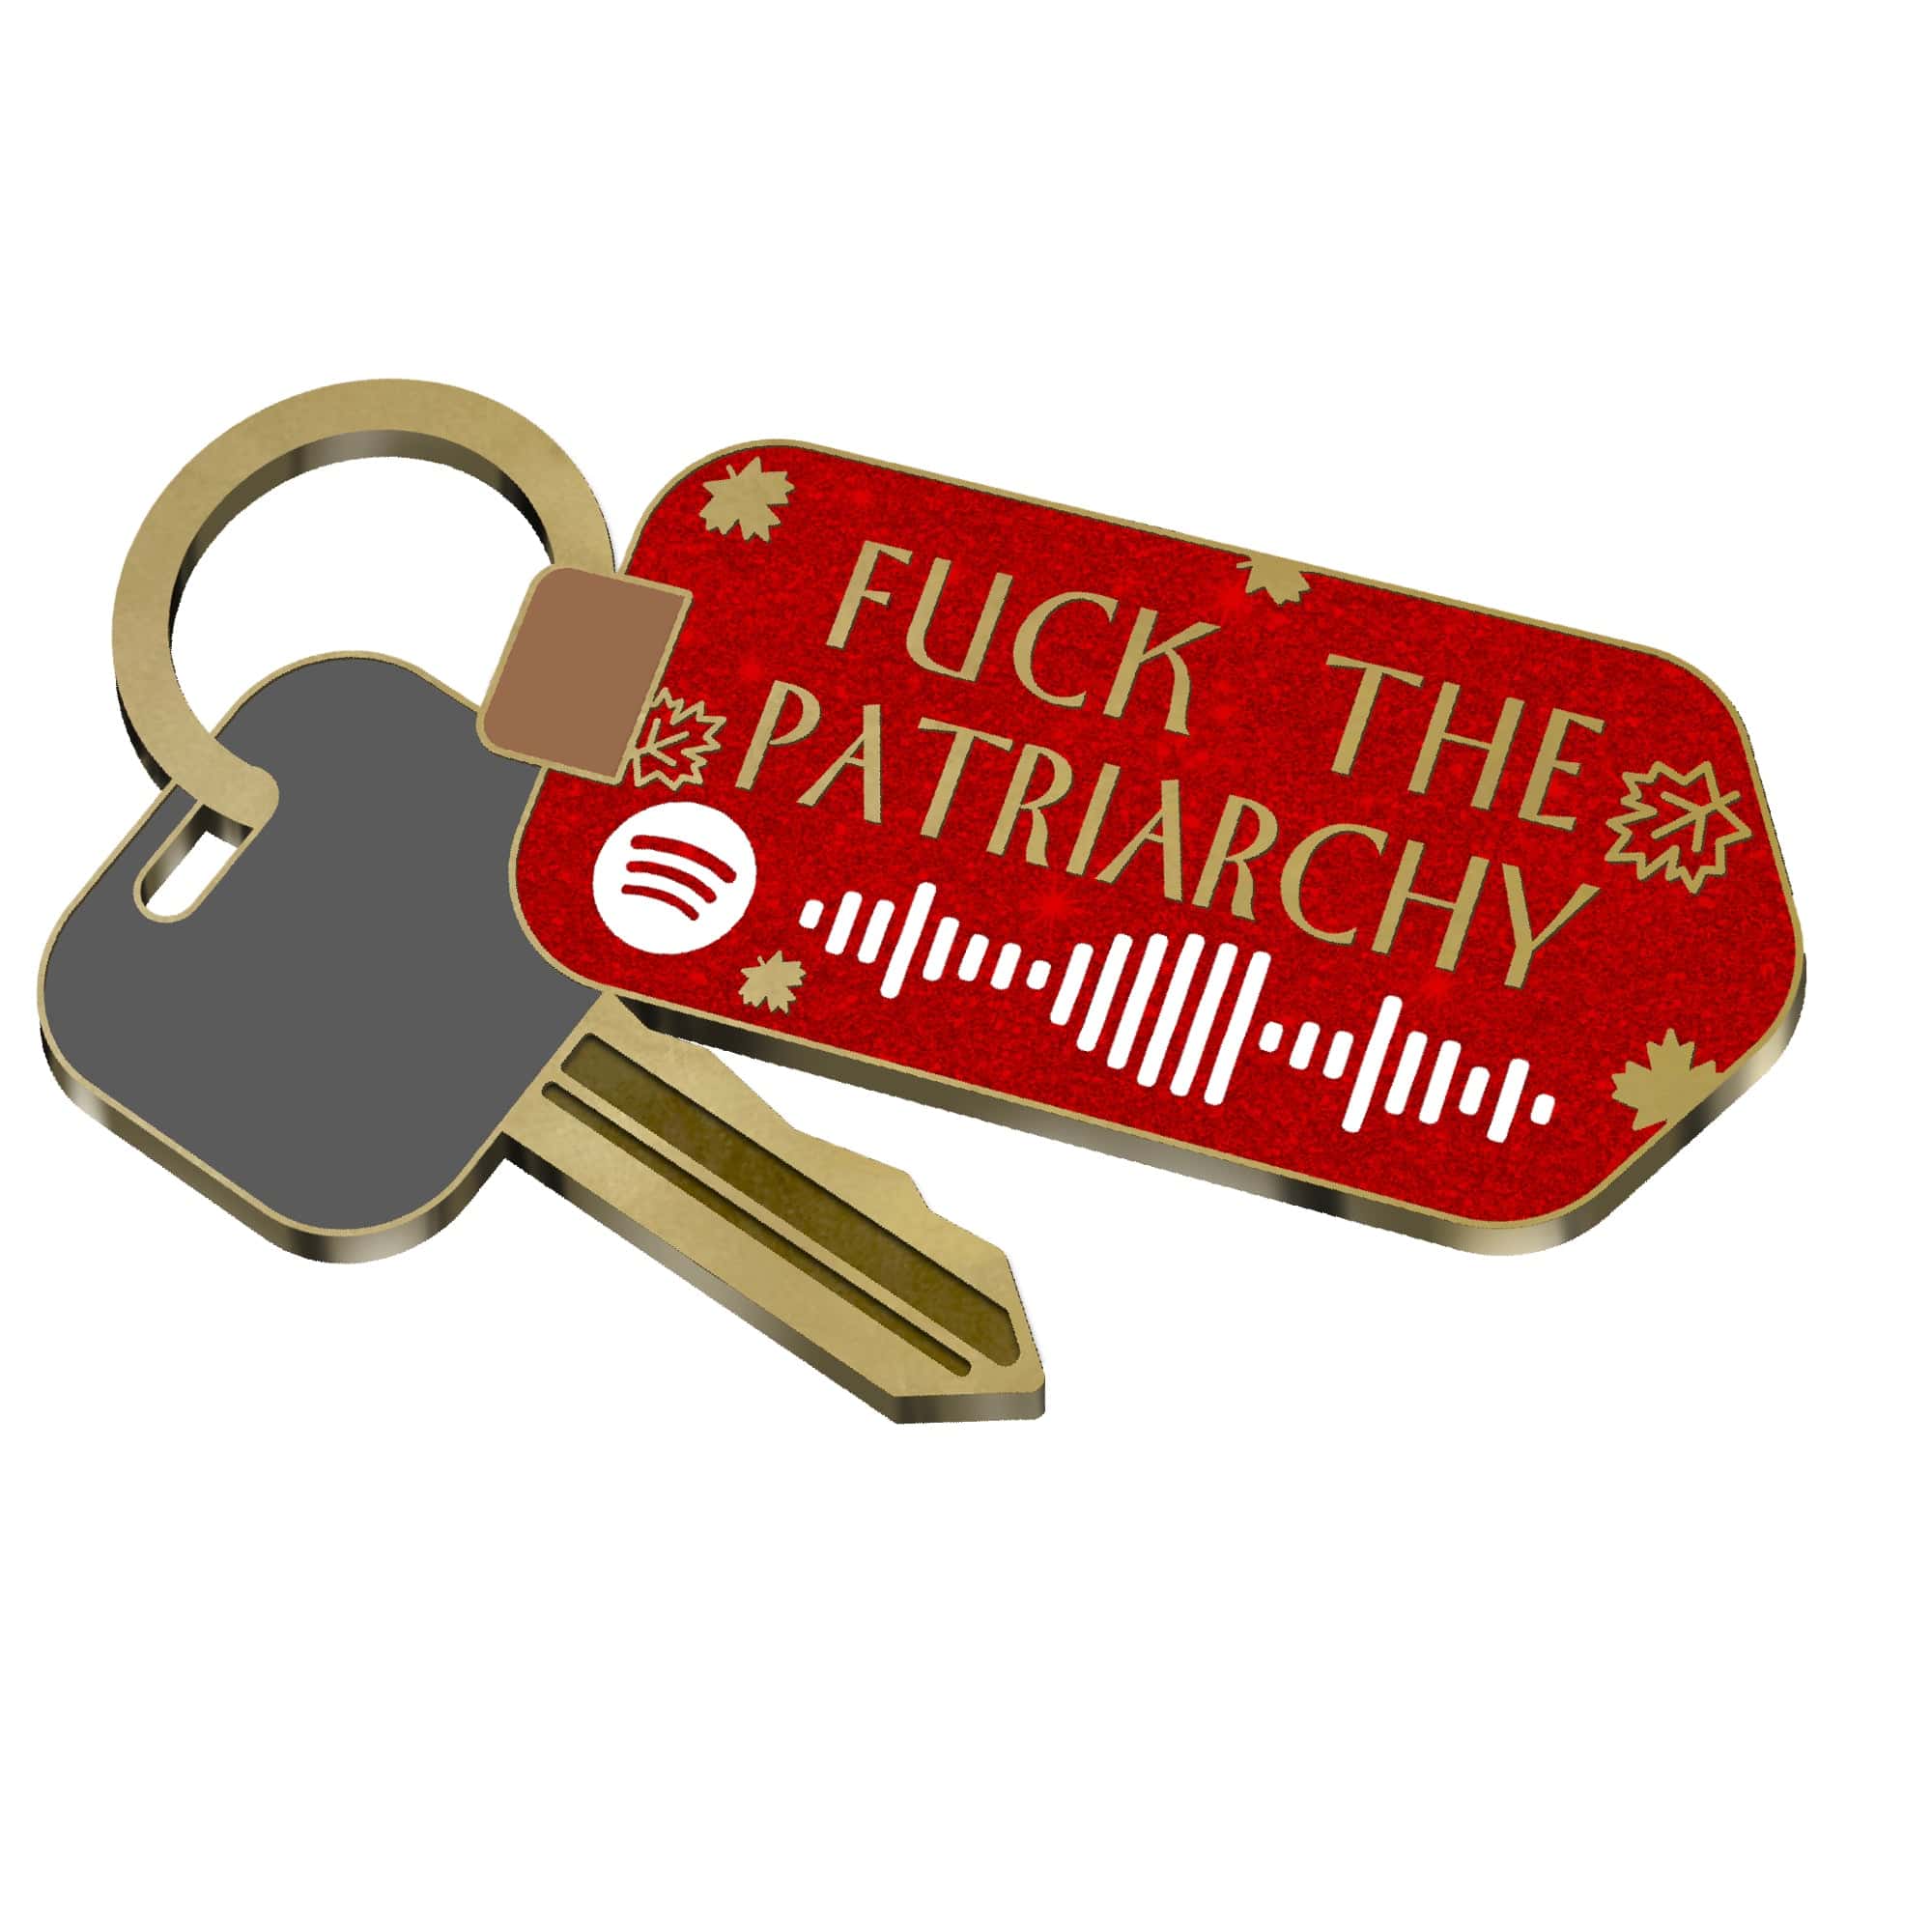 pinbuds Fuck the patriarchy 2 pin set & keychain